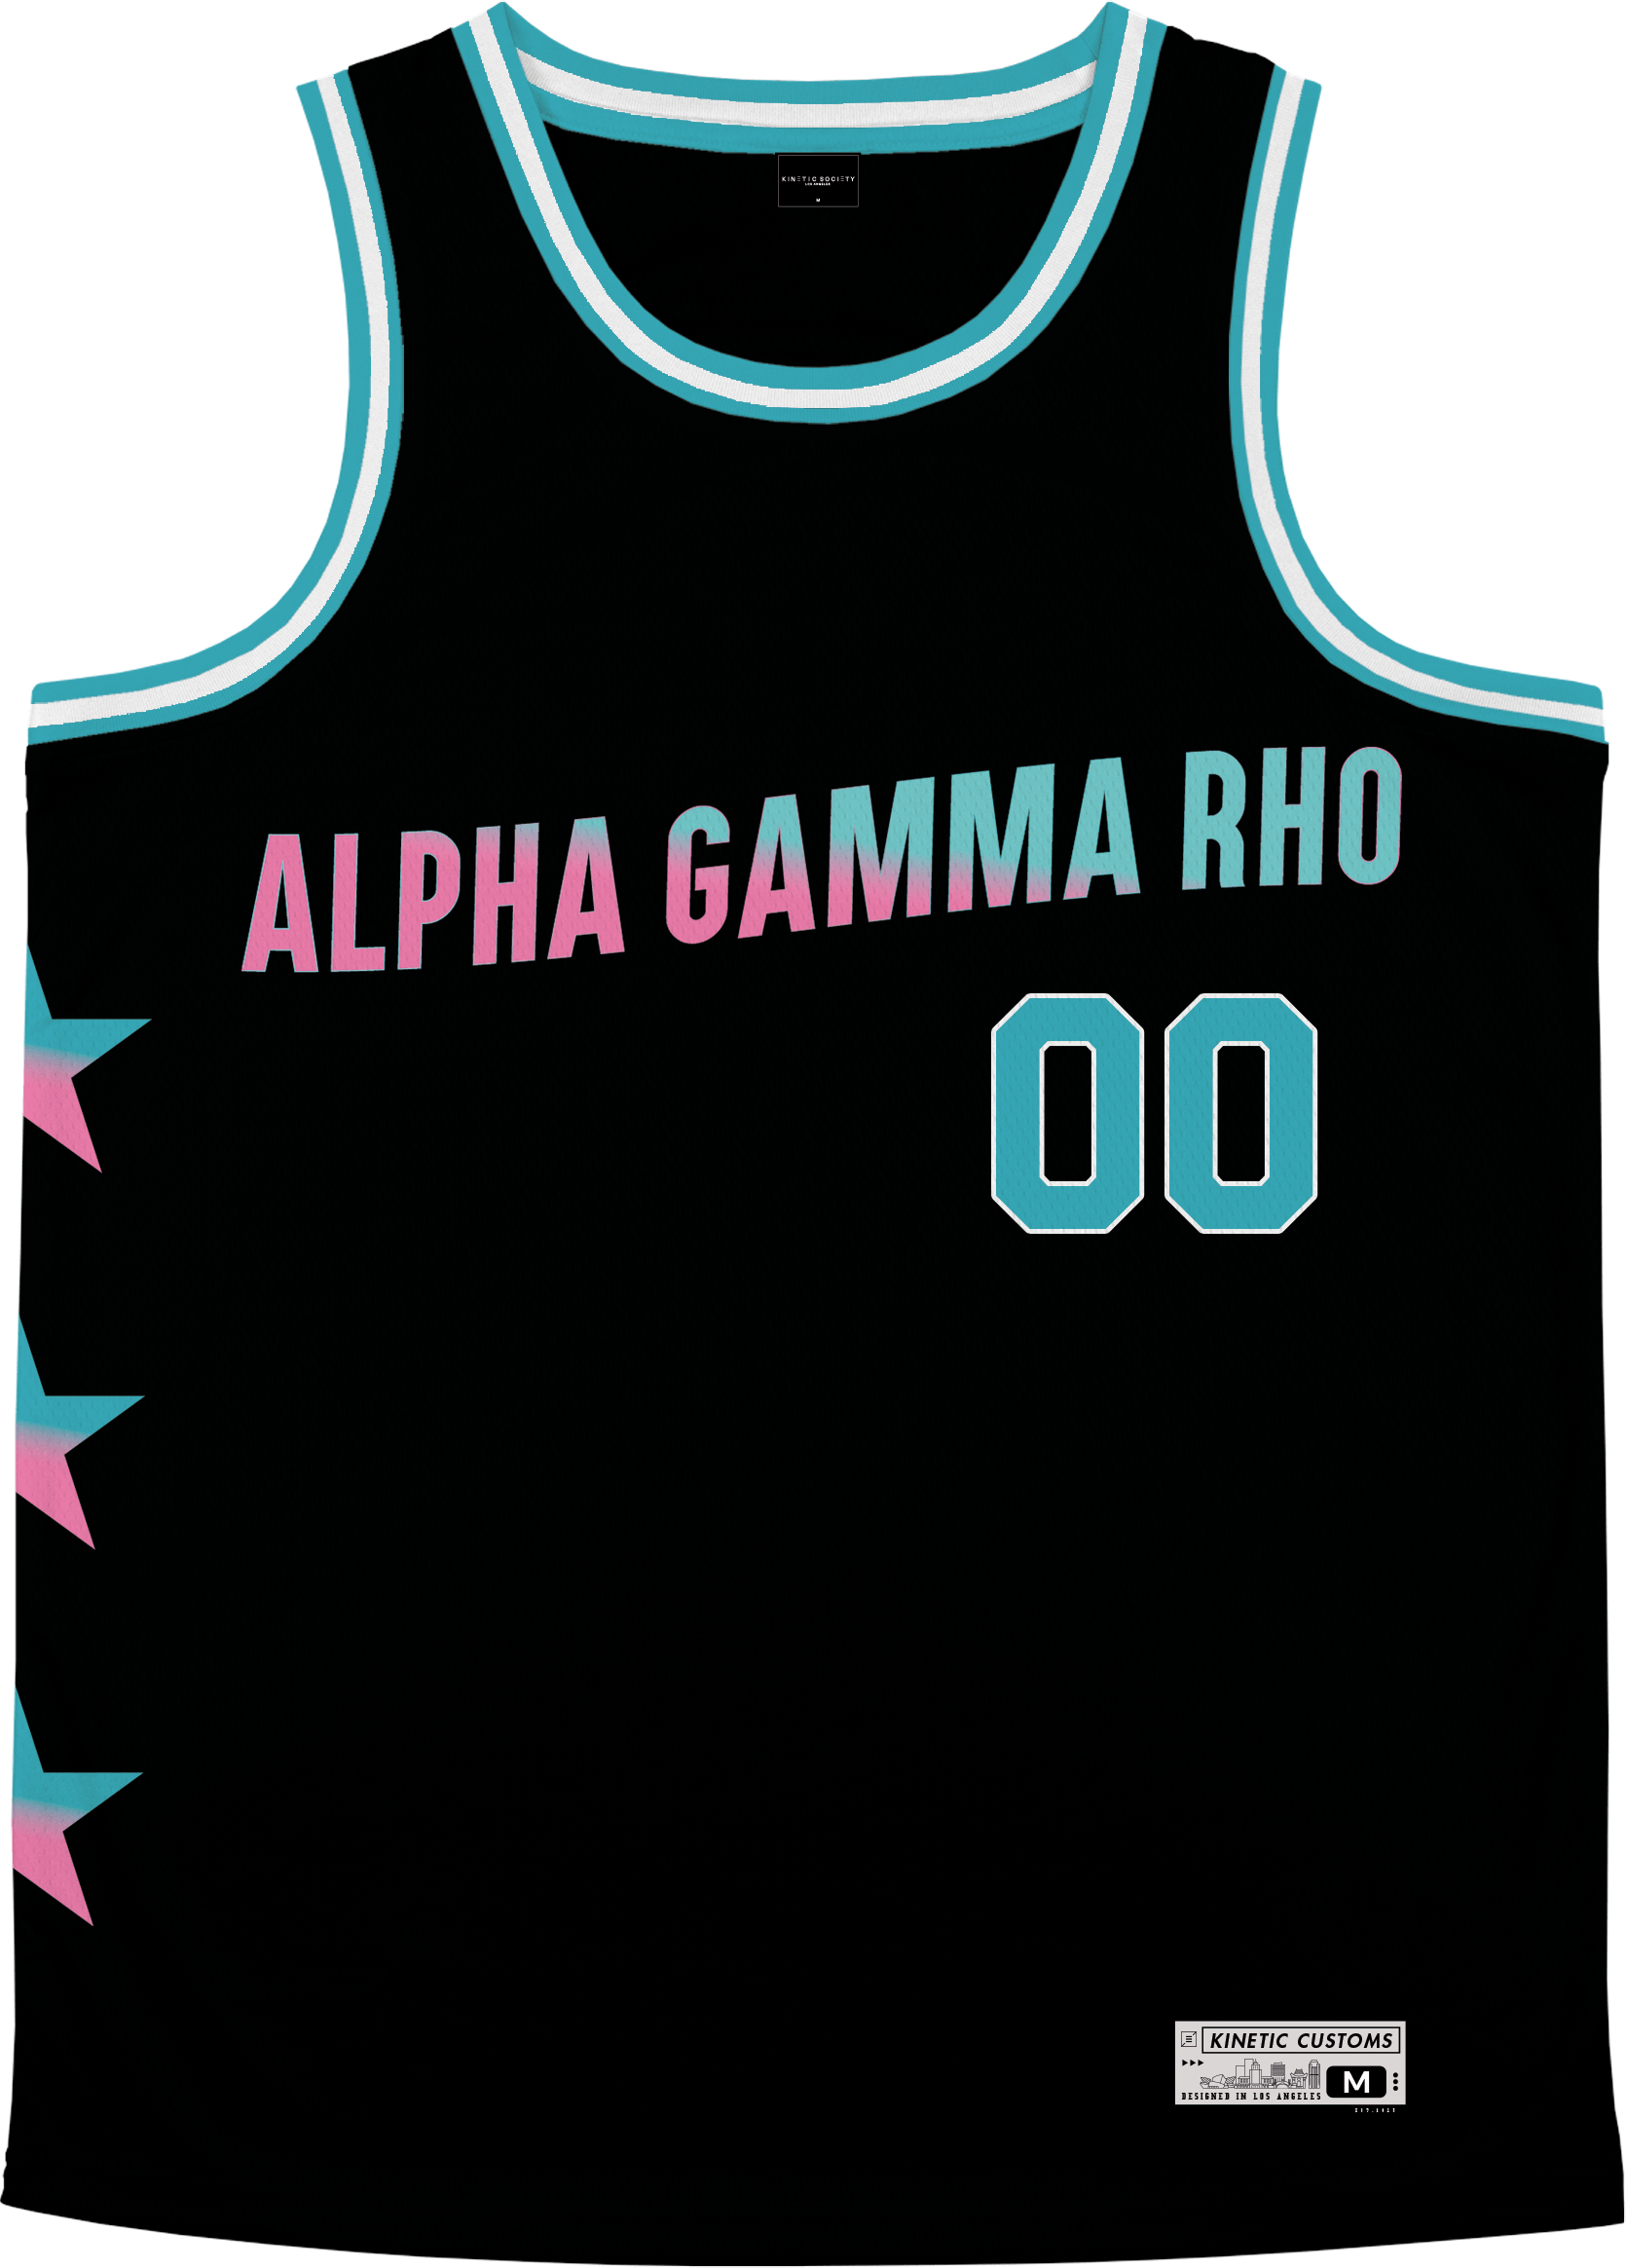 Alpha Gamma Rho - Cotton Candy Basketball Jersey Premium Basketball Kinetic Society LLC 